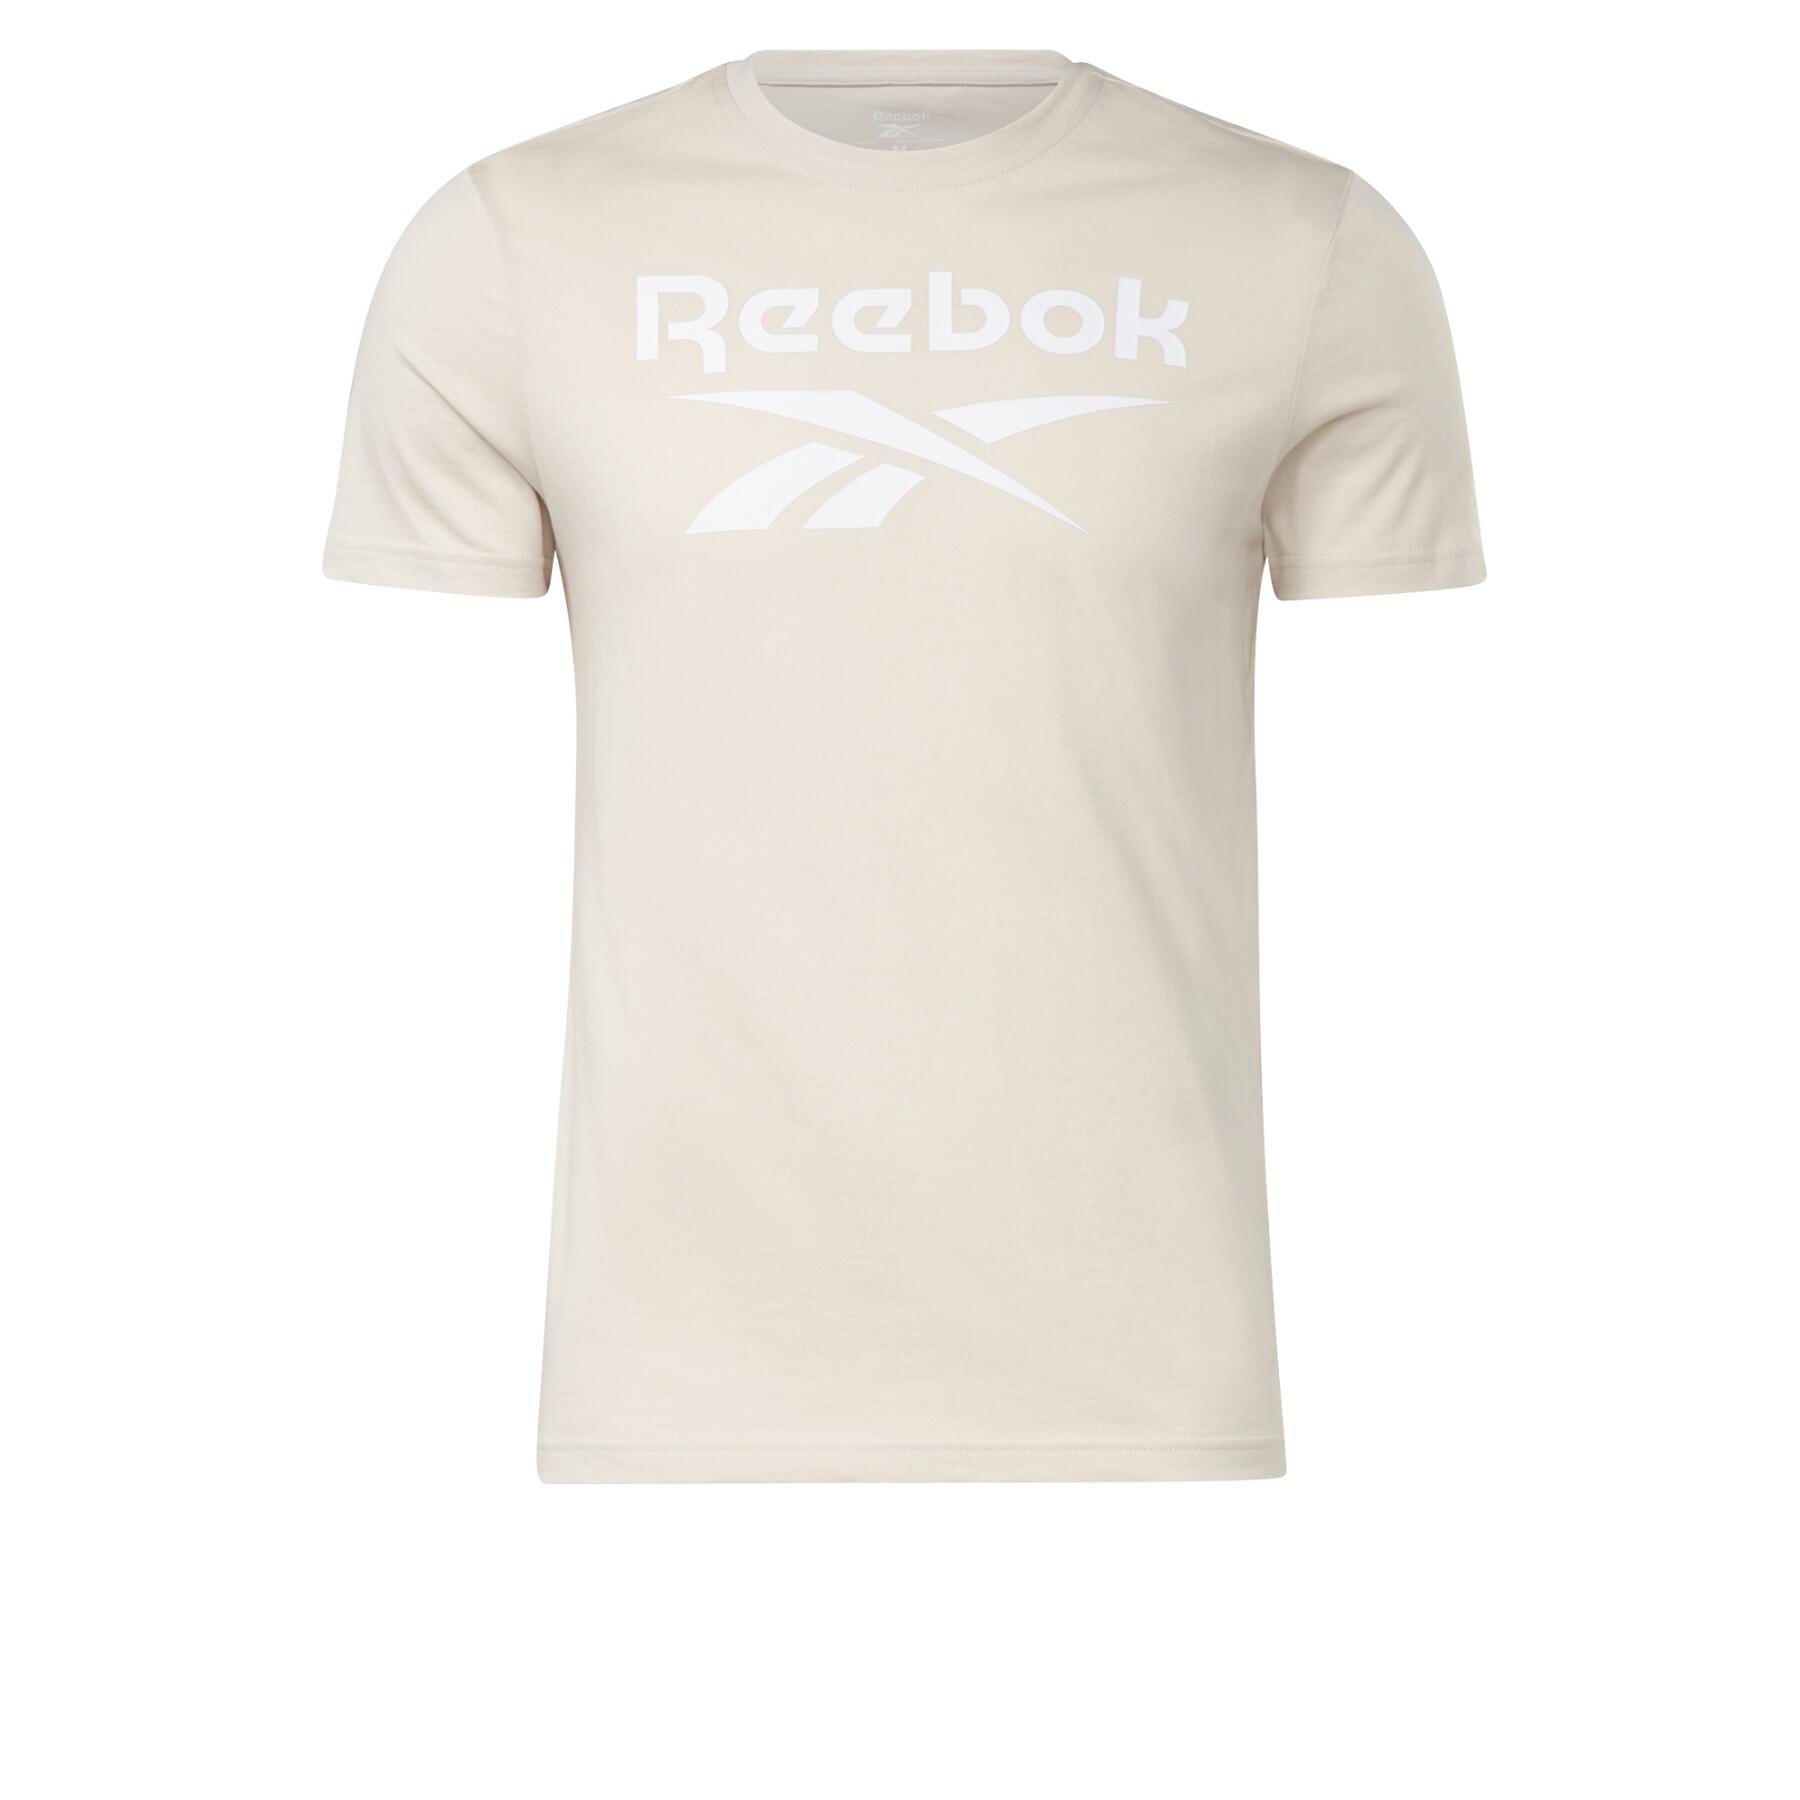 Bedrukt T-shirt Reebok Series Stacked